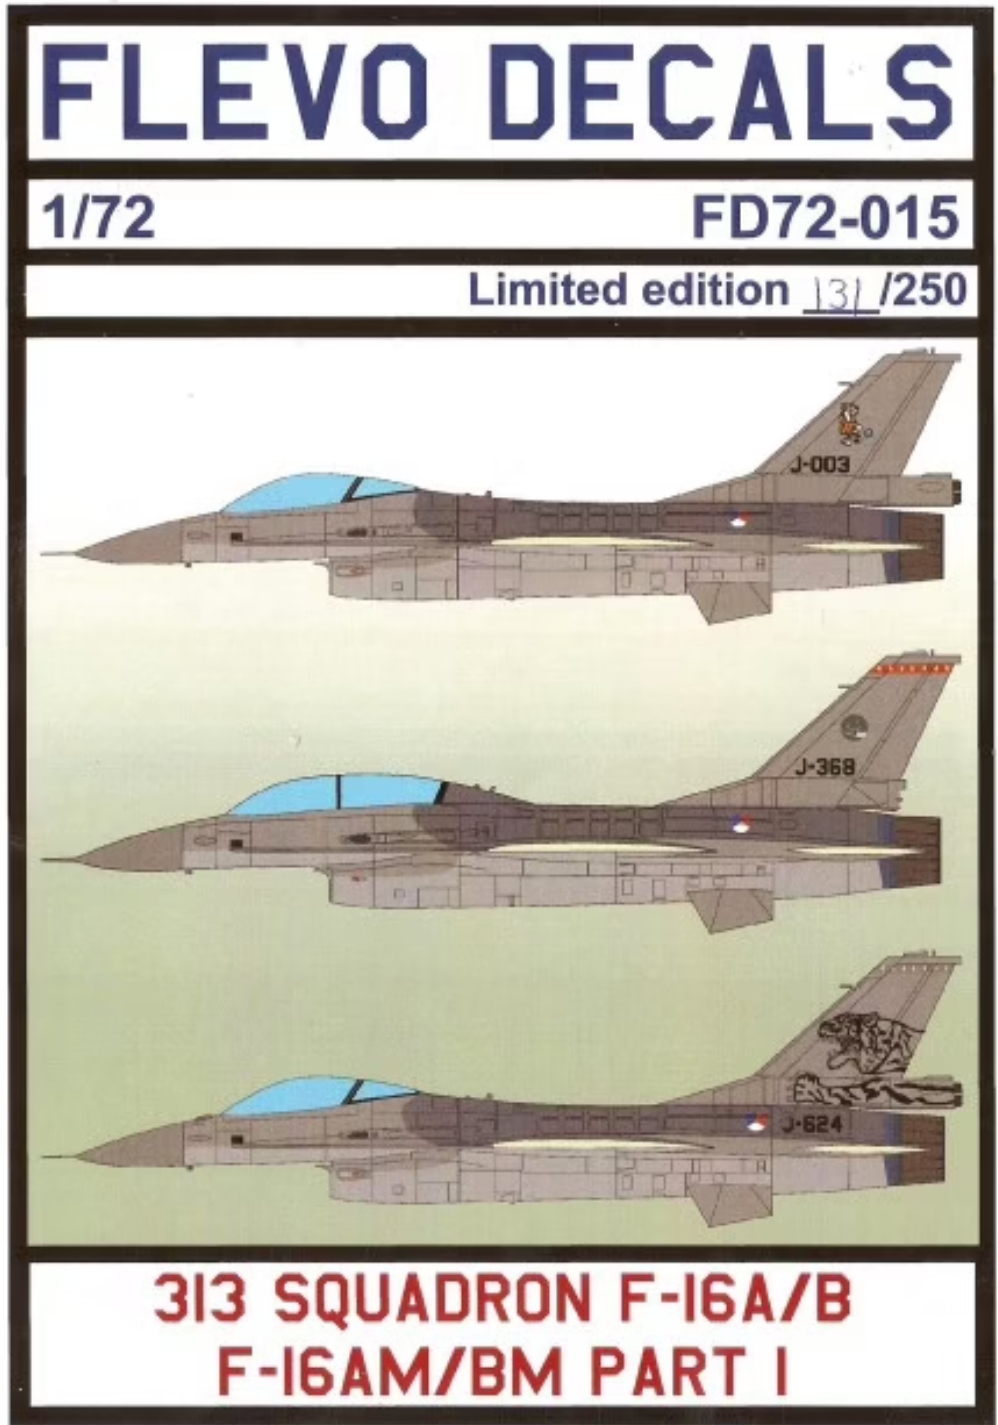 FD72-015 - 313 SQ F-16A/B F-16AM/BM Part 1 - scale 1/72